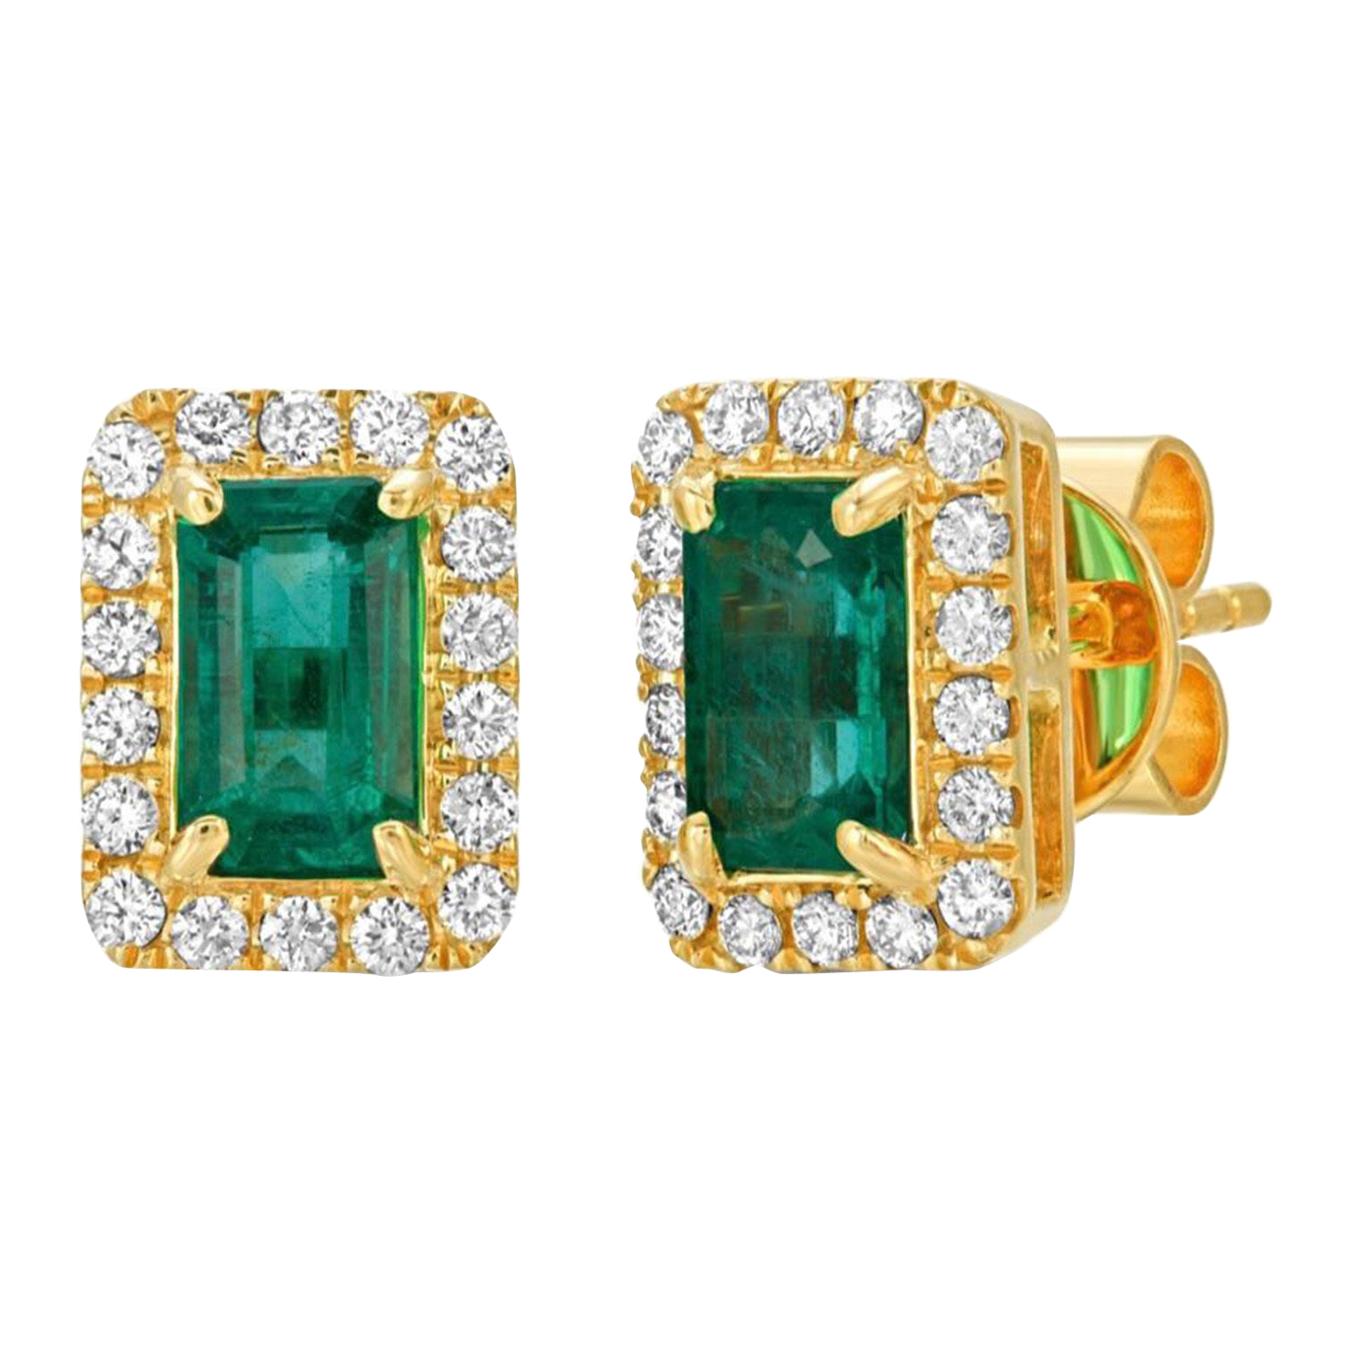 1.10 Ct Colombian Emerald & 0.30 Ct Diamonds in 14k Yellow Gold Stud Earrings